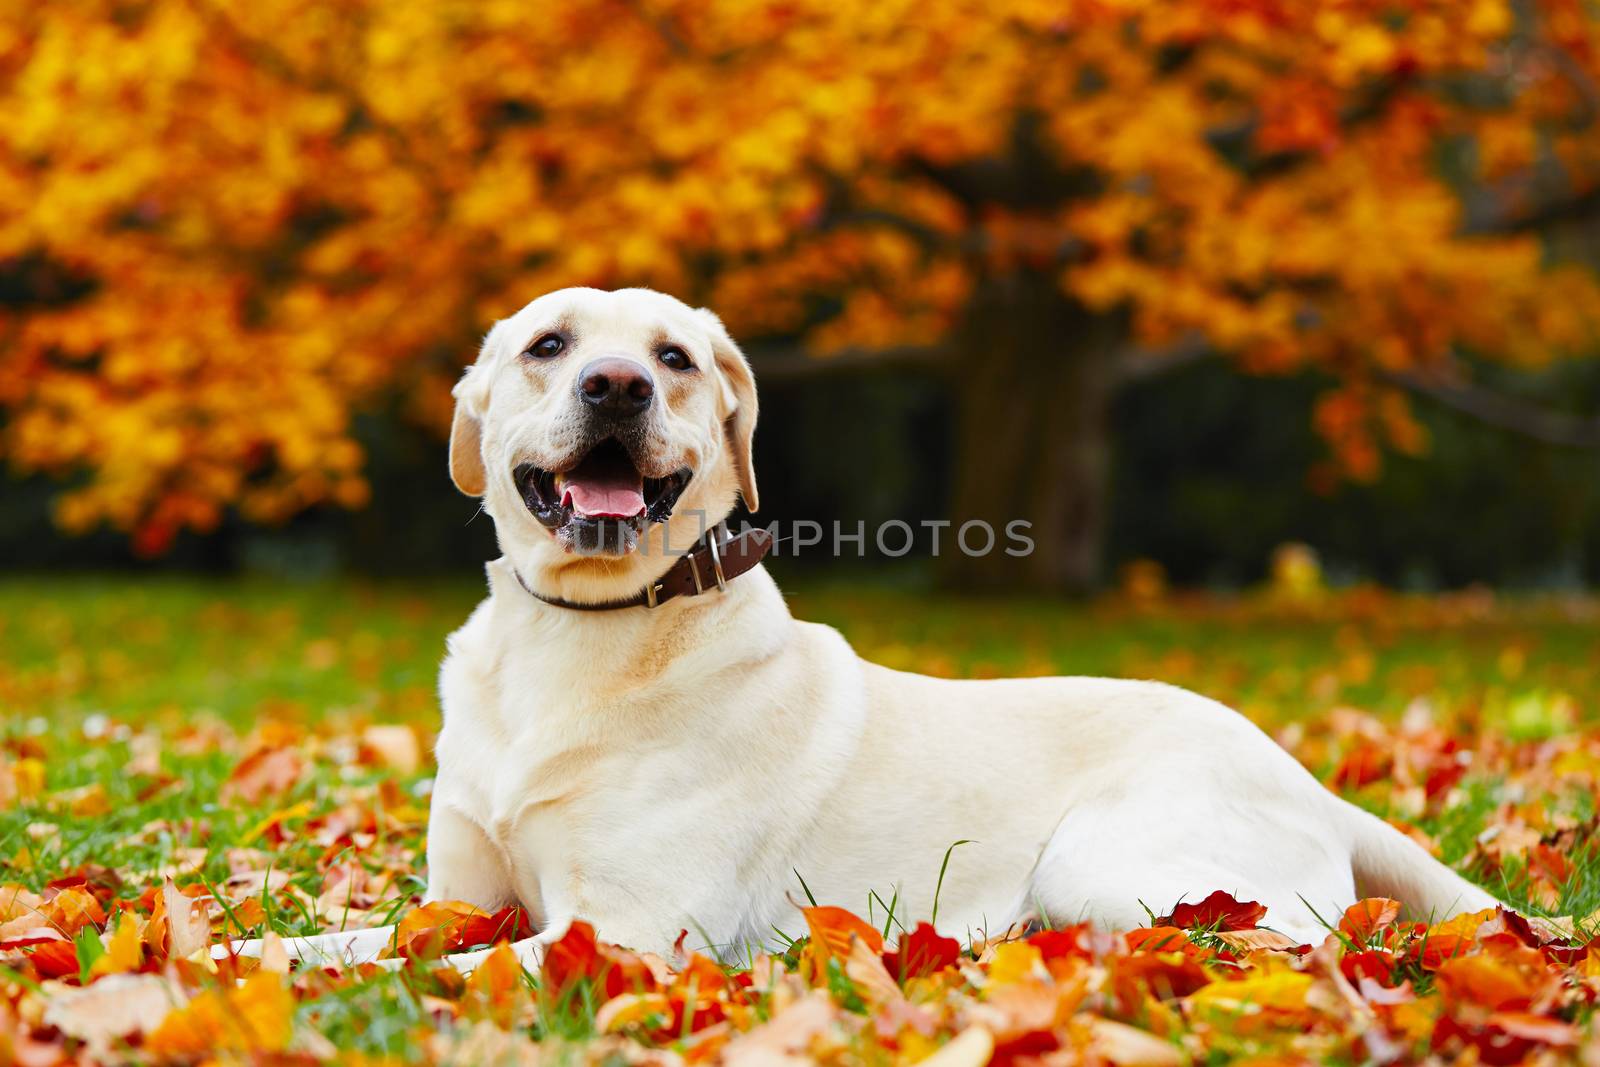 Dog in autumn park  by Chalabala